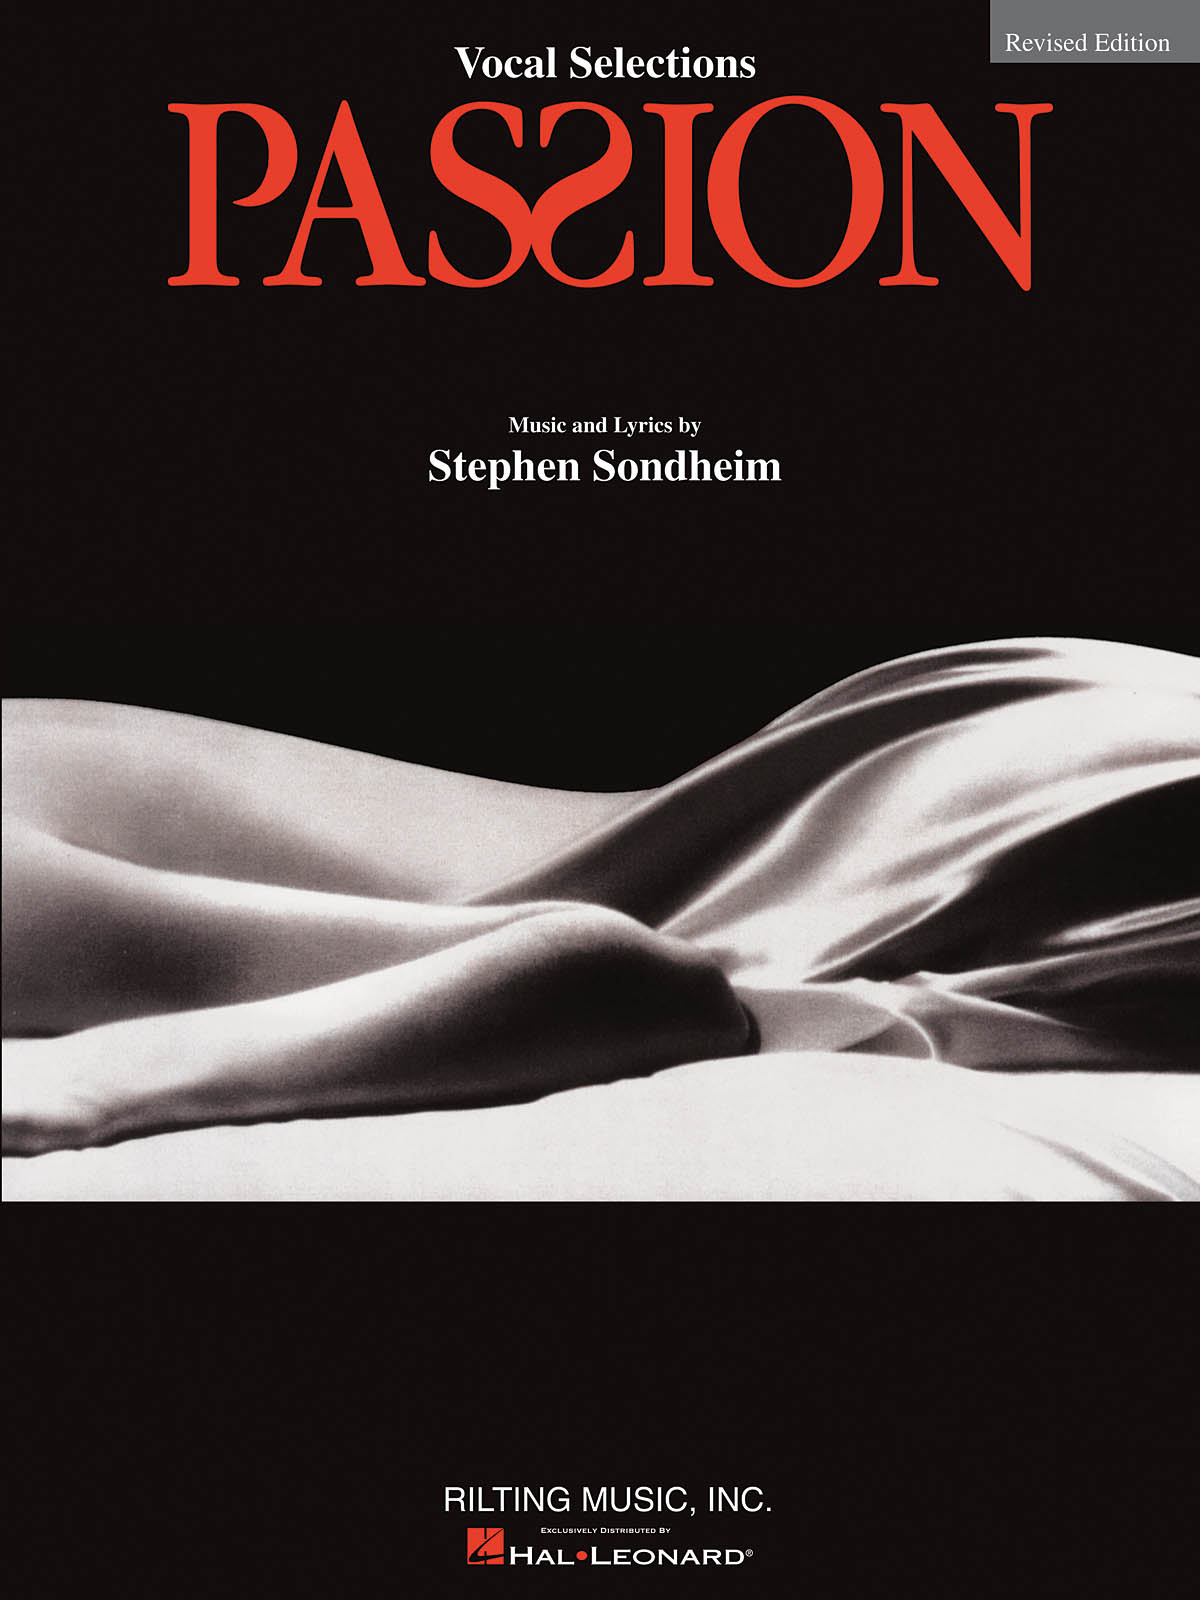 Stephen Sondheim: Stephen Sondheim - Passion - Revised Edition: Vocal and Piano: